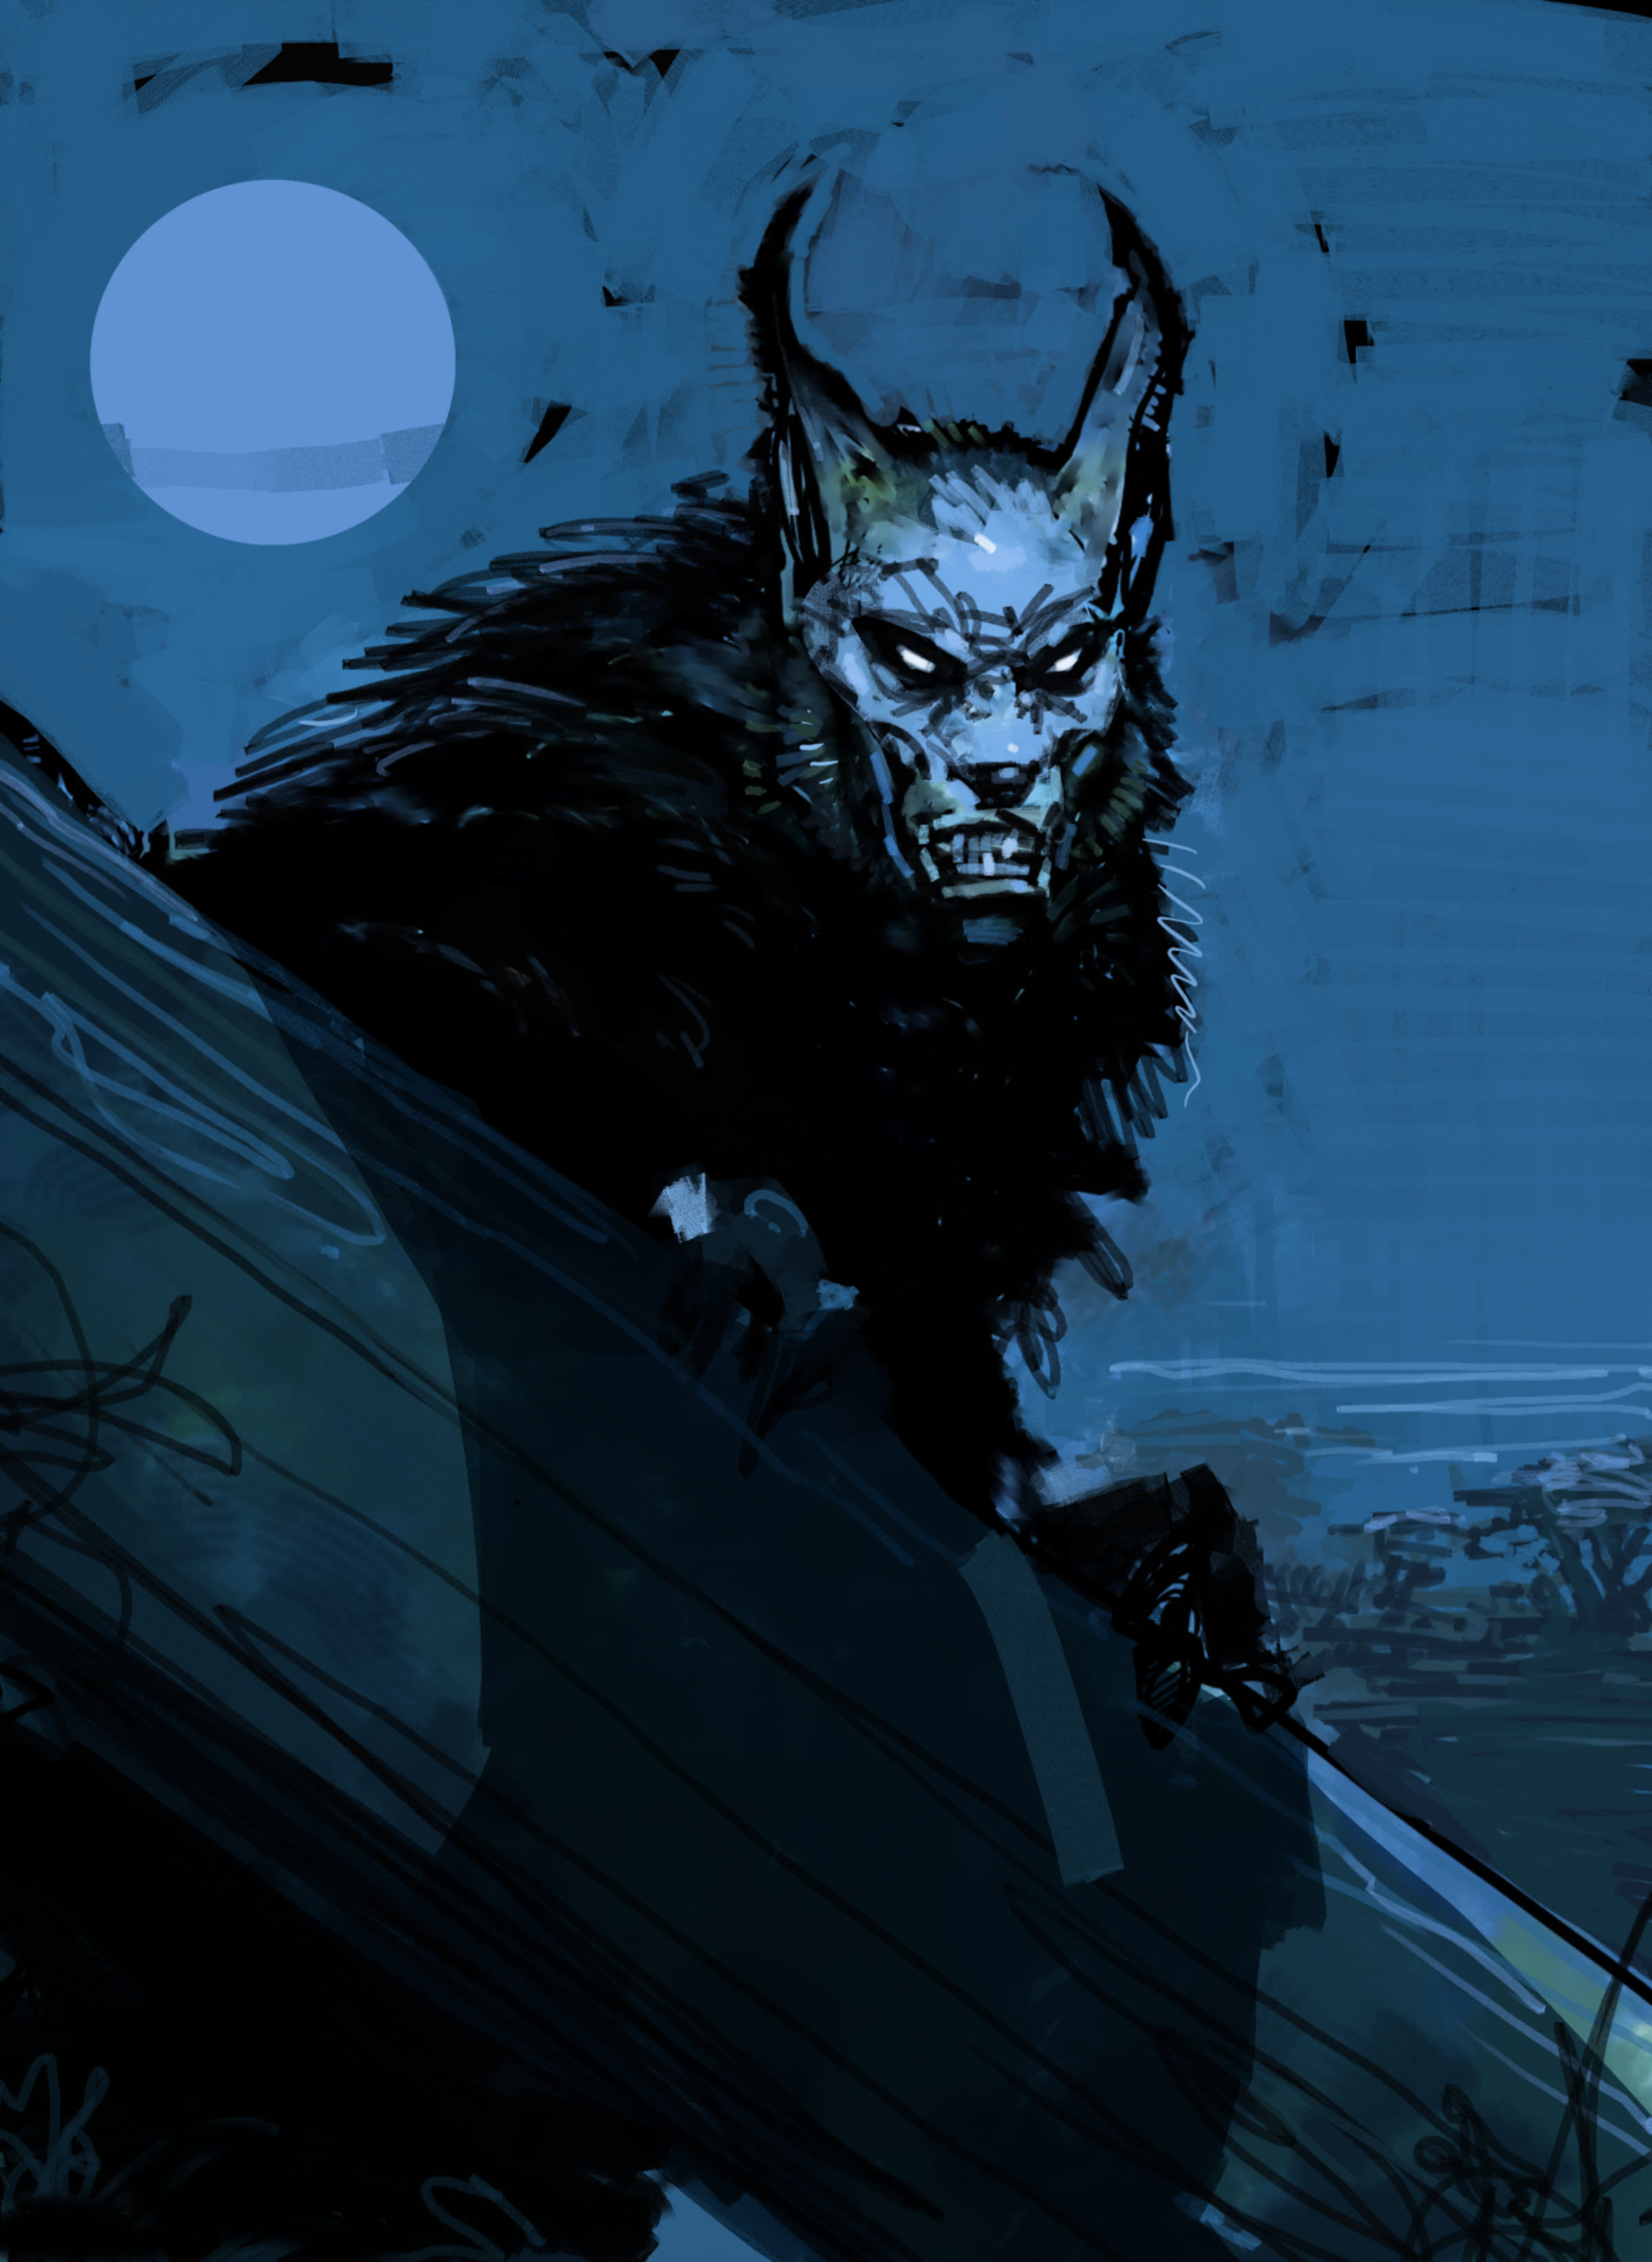 A werewolf snarling under a full moon from the Prisoner of Azkaban 